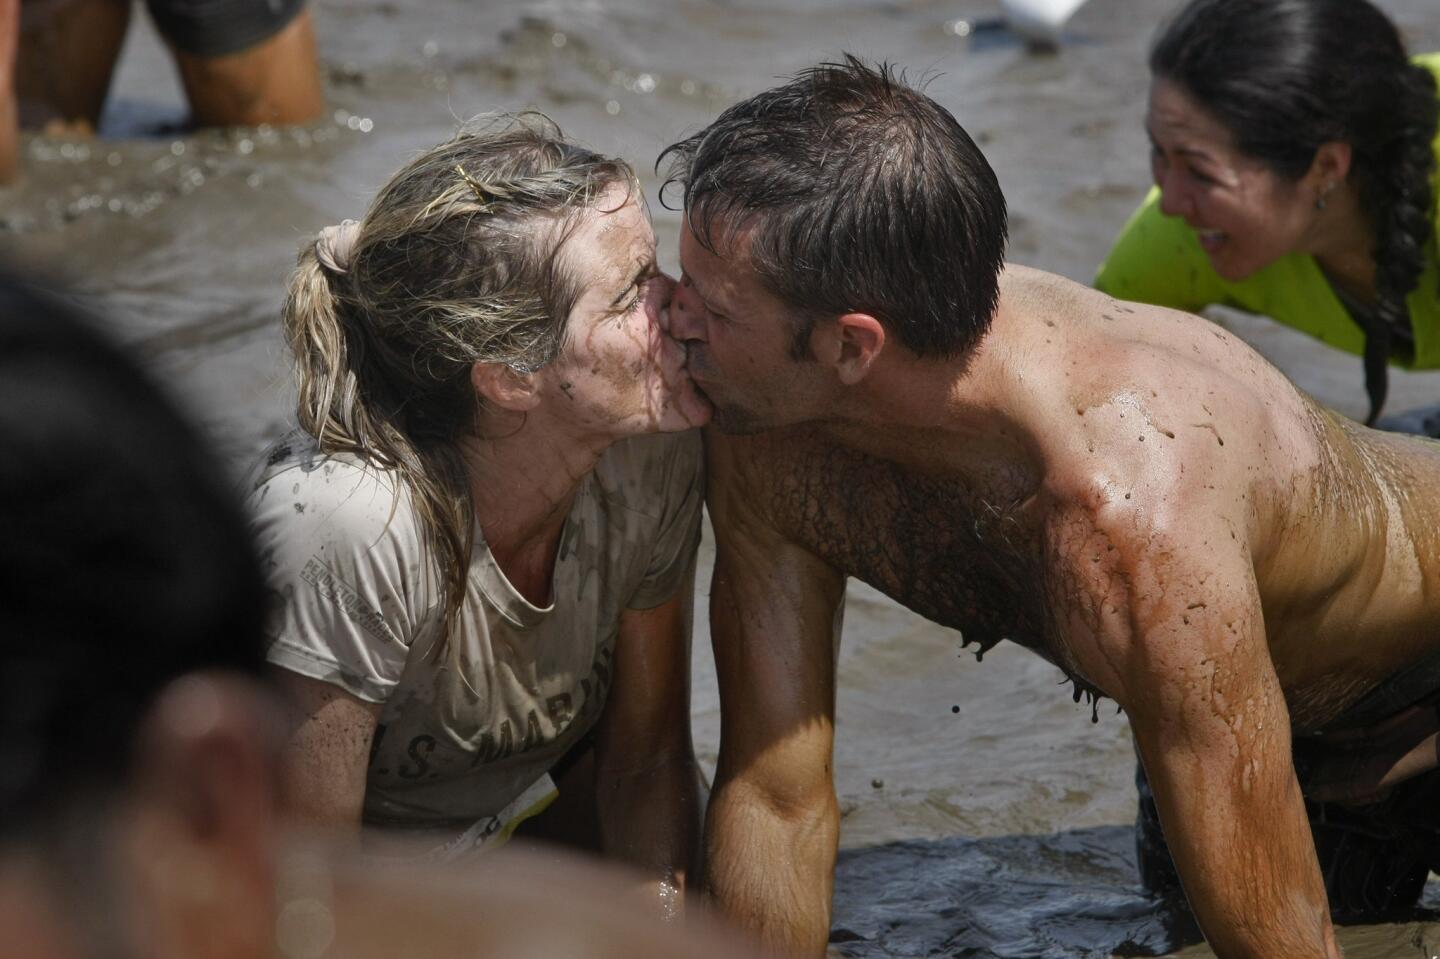 A muddy kiss